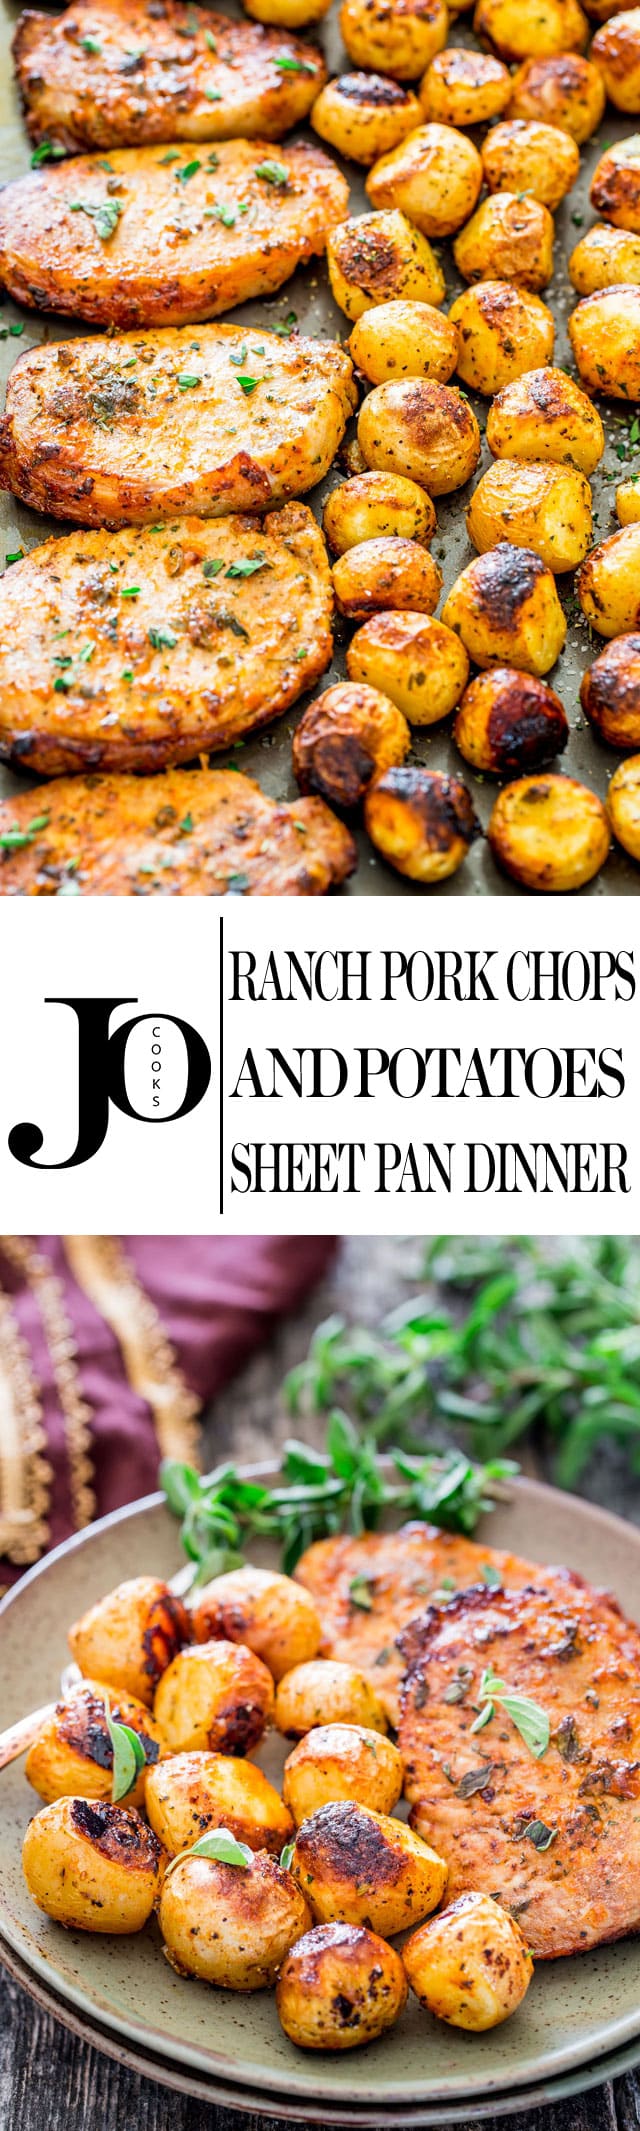 Ranch Pork Chops and Potatoes Sheet Pan Dinner - Jo Cooks